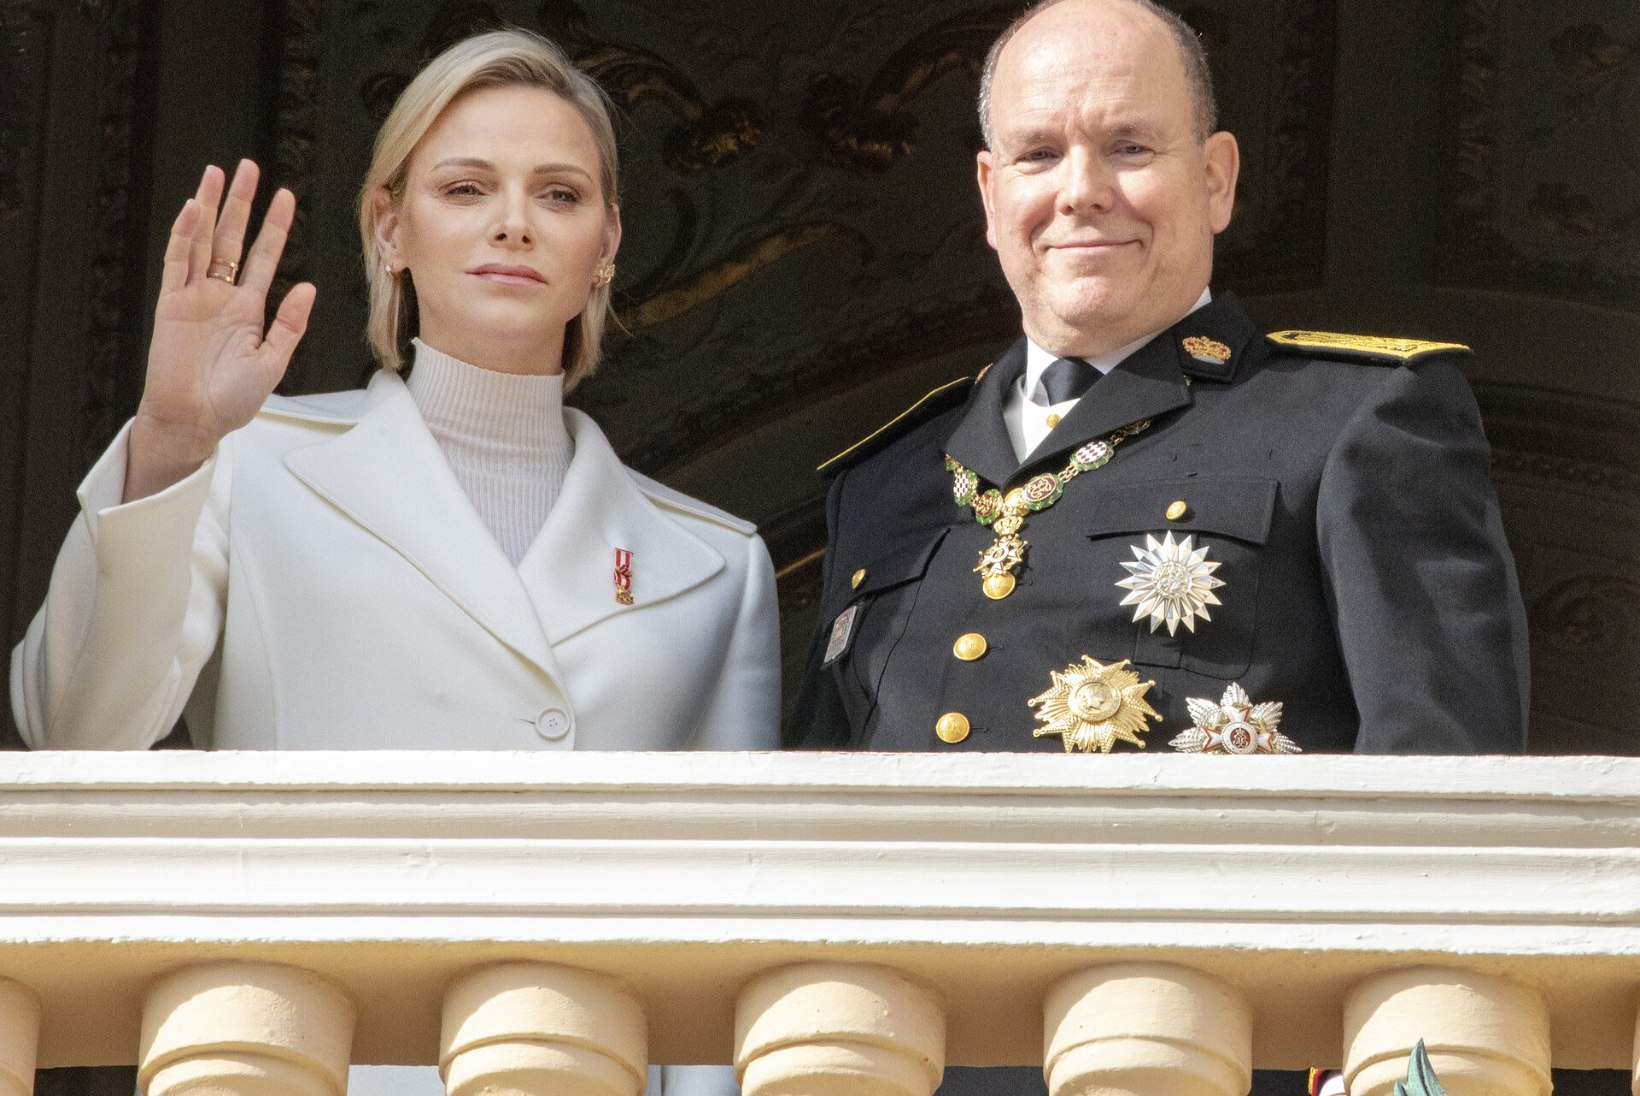 Monaco vürst: „Vürstinna Charlene on valmis koju tulema.“